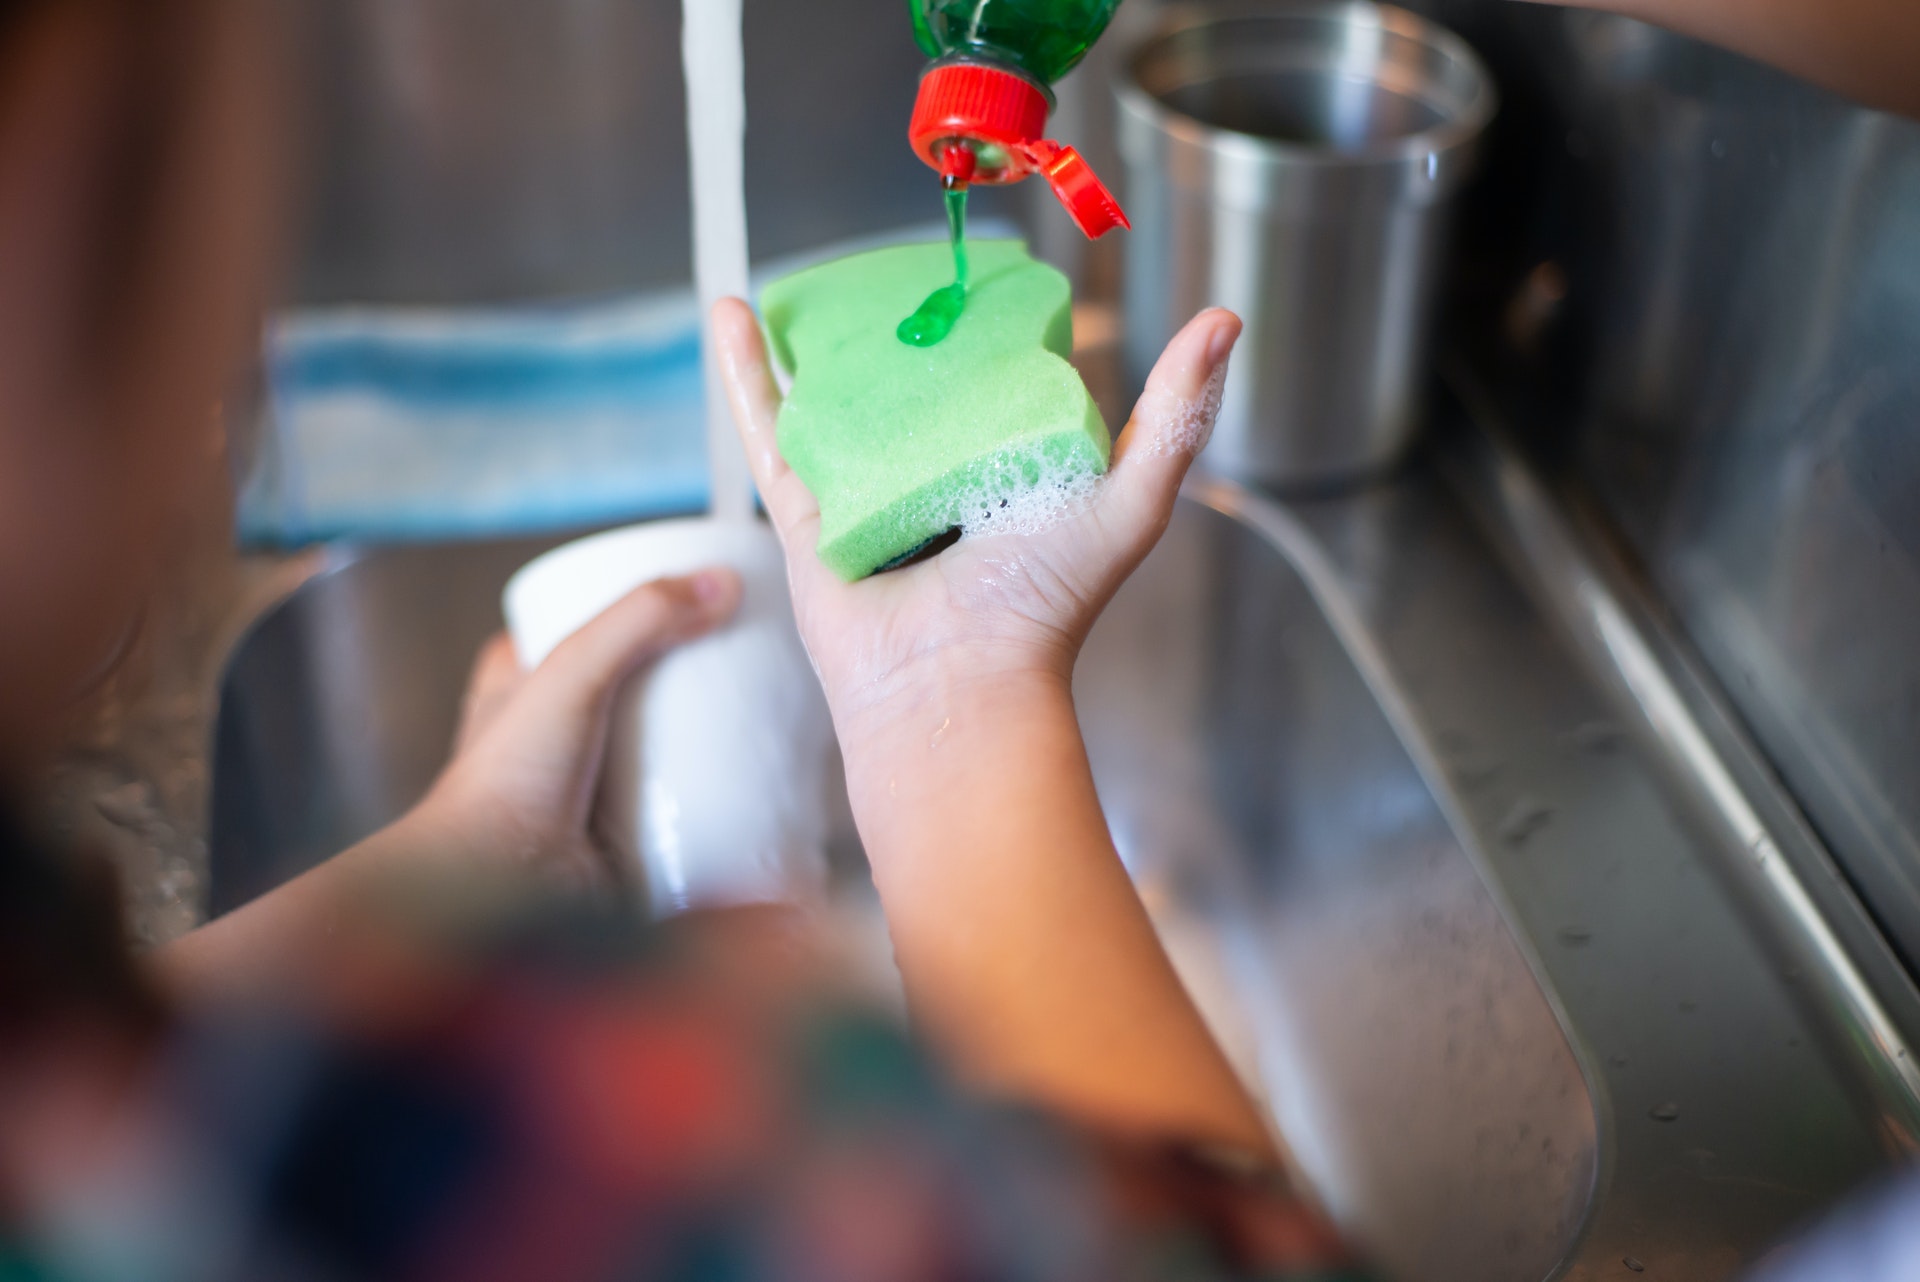 Dishwashing liquid on sponge in a hand